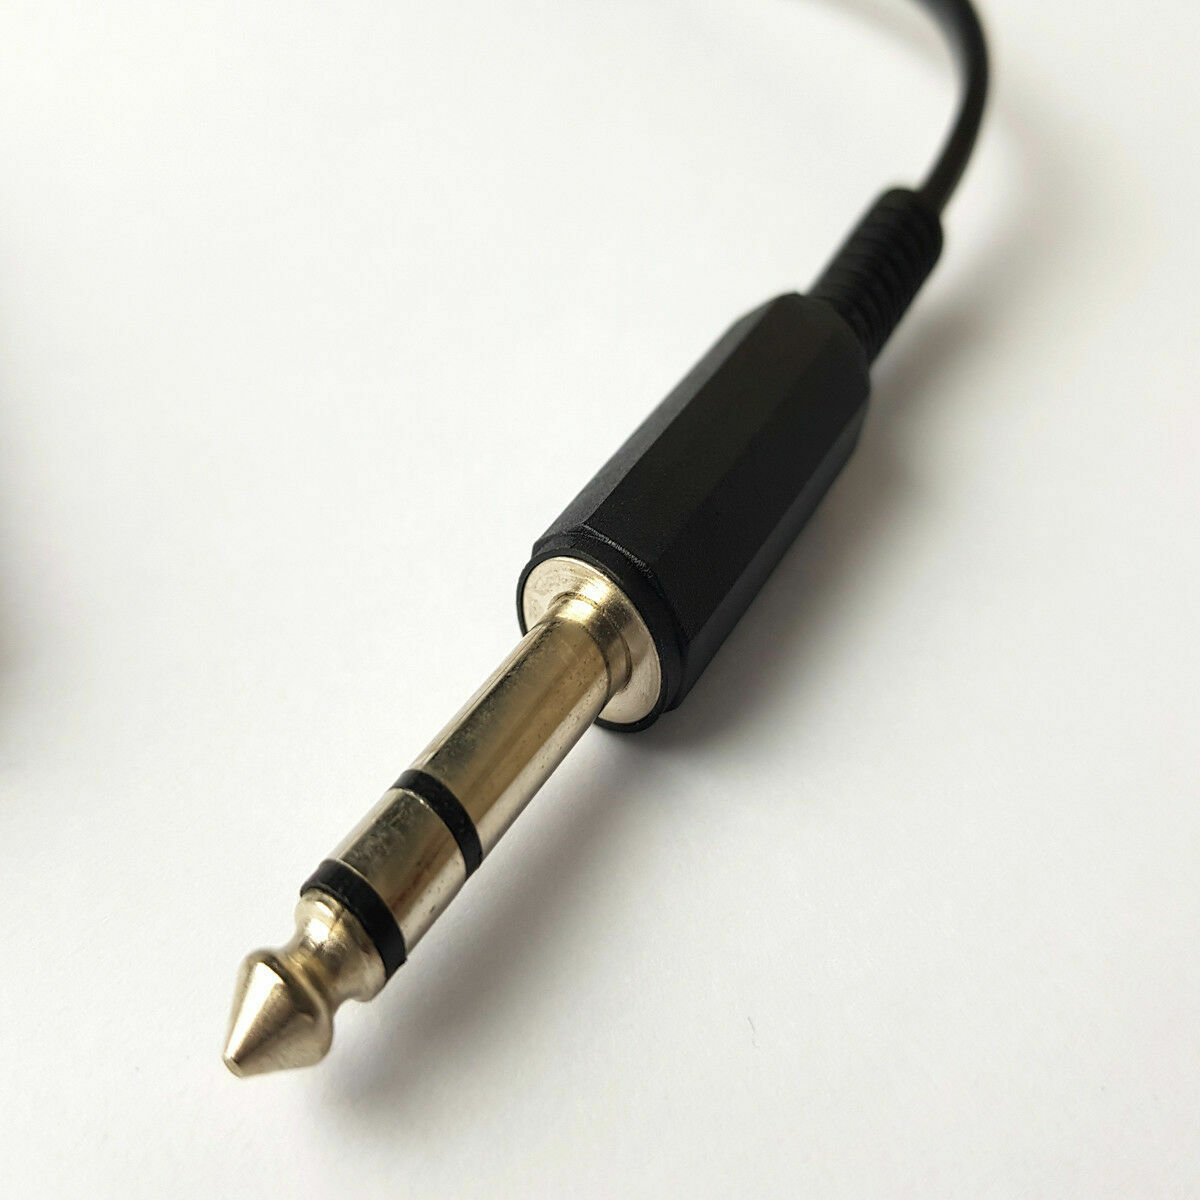 635mm-Stereo-Splitter-Cable-14-Plug-To-2-x-Jack-Socket-Headphone-Adapter-253973185634-2.jpg